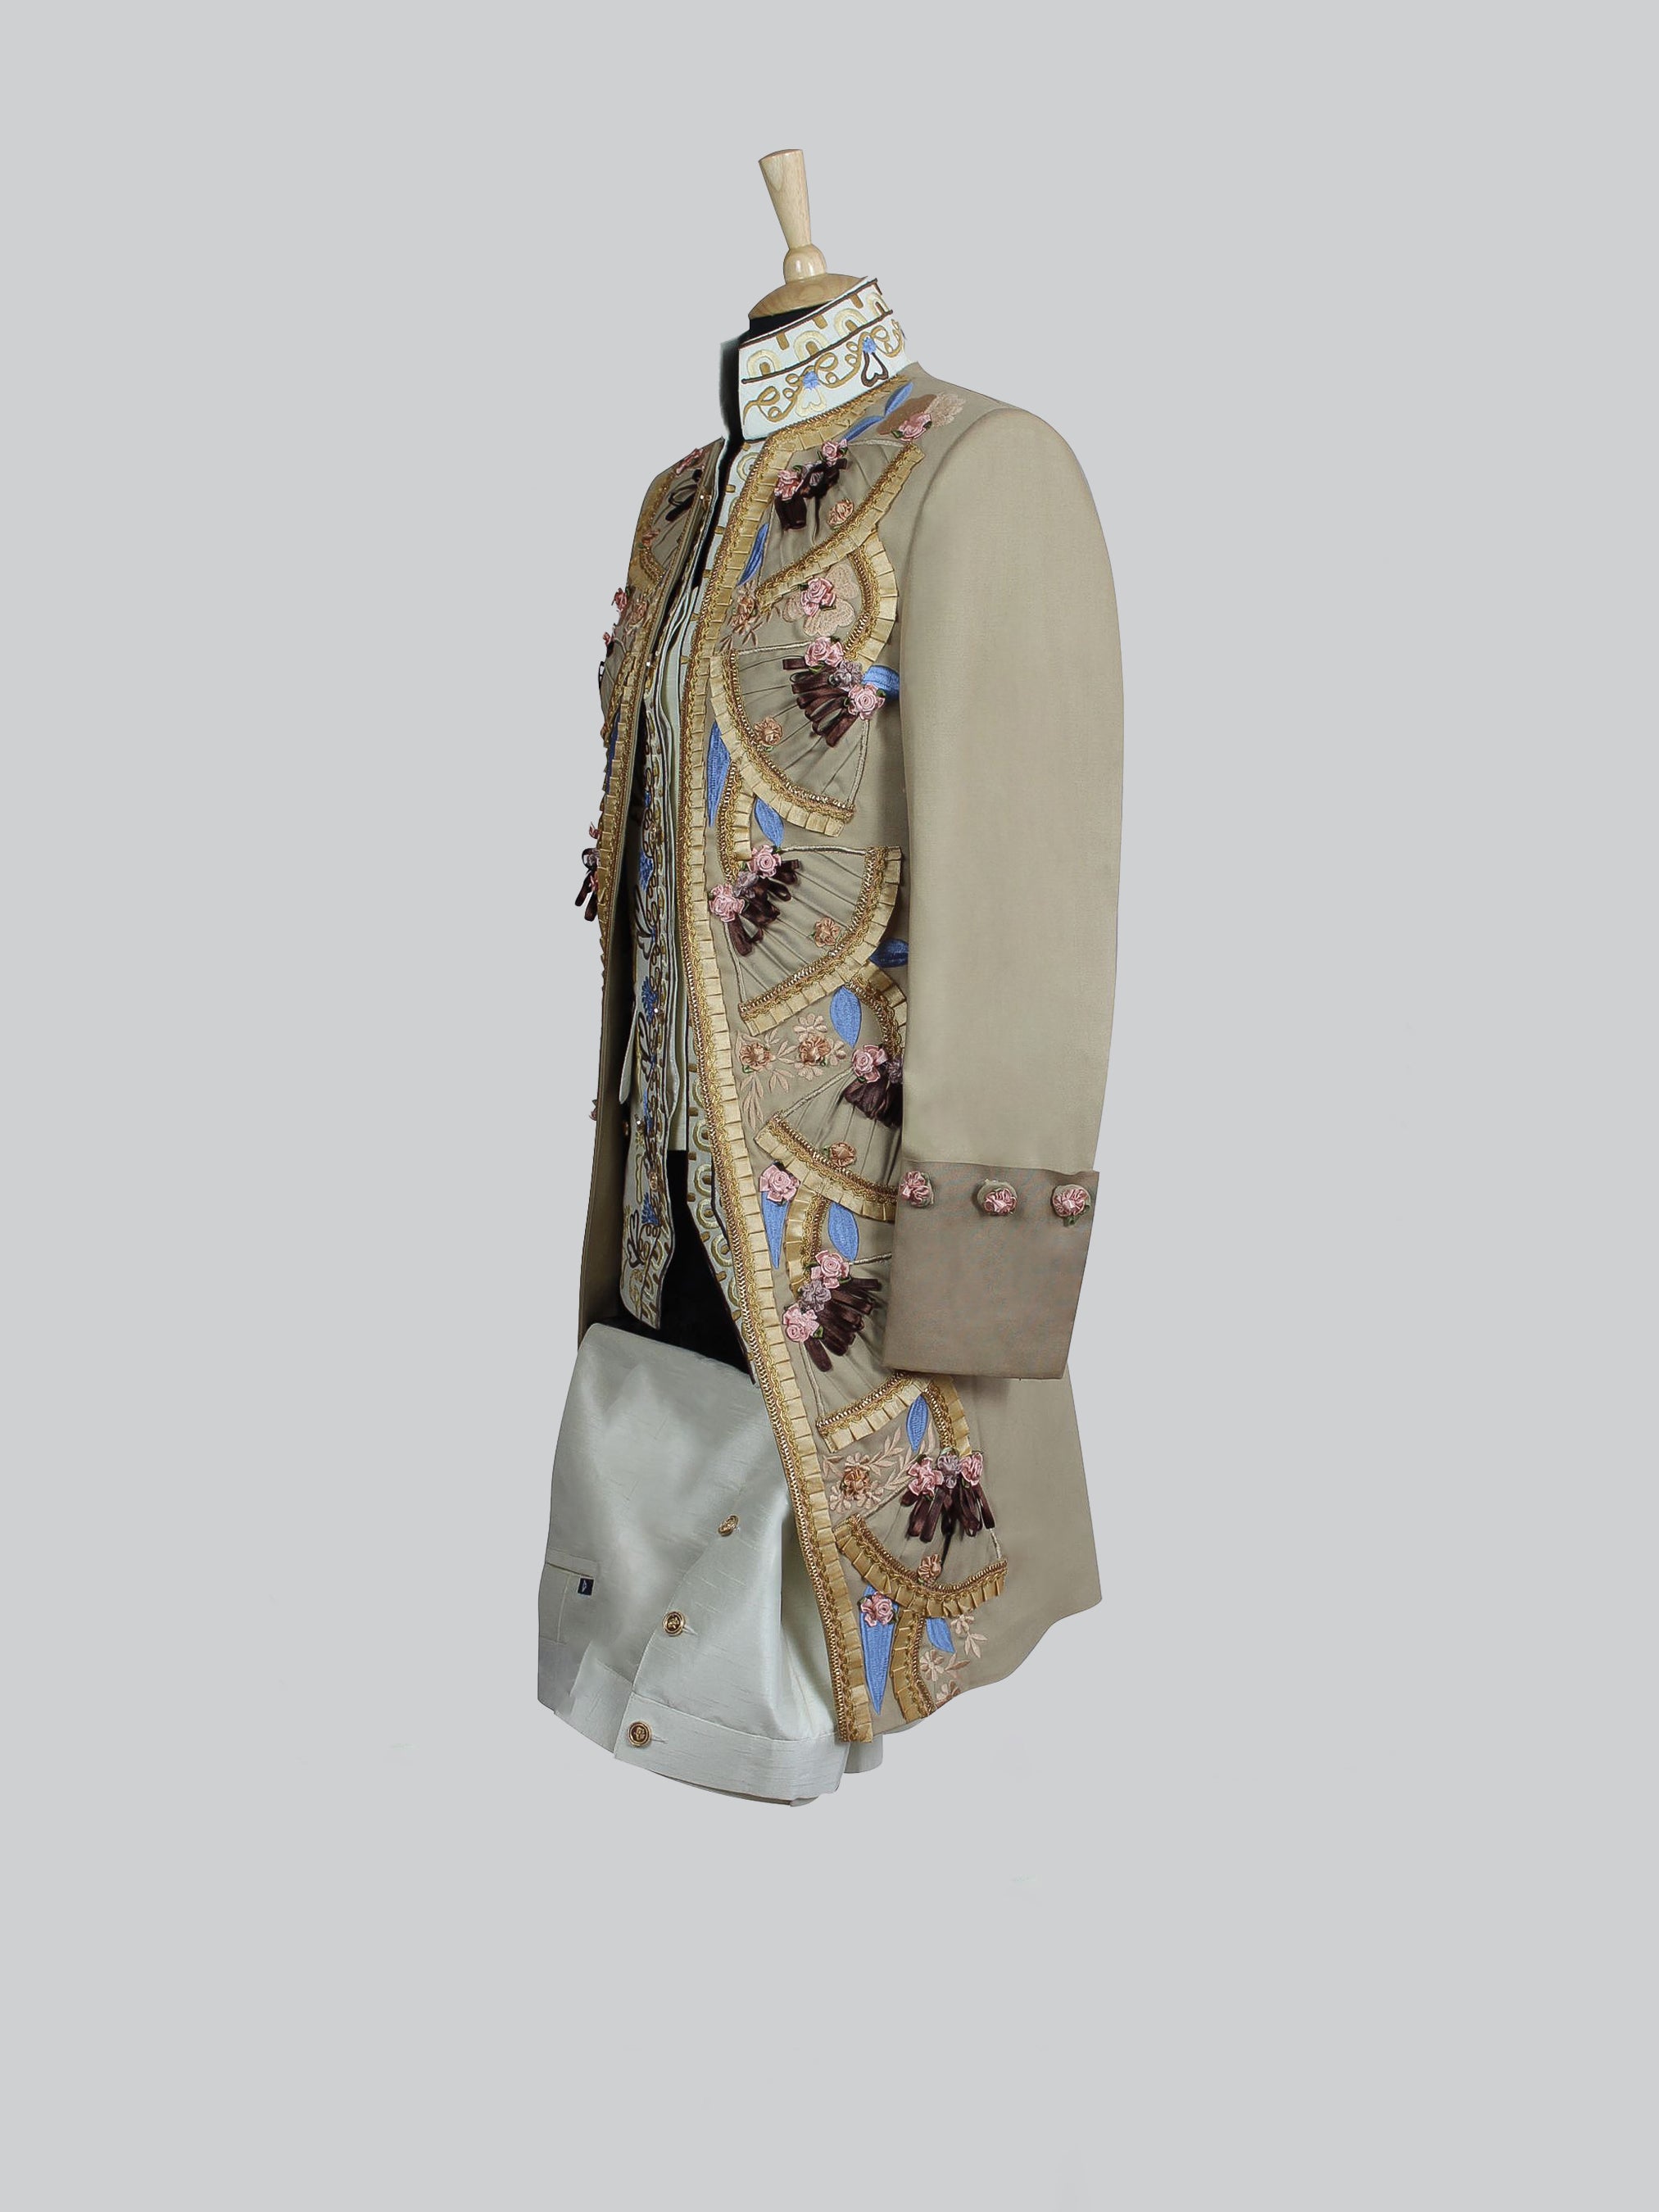 1700s Style Rococo Costume